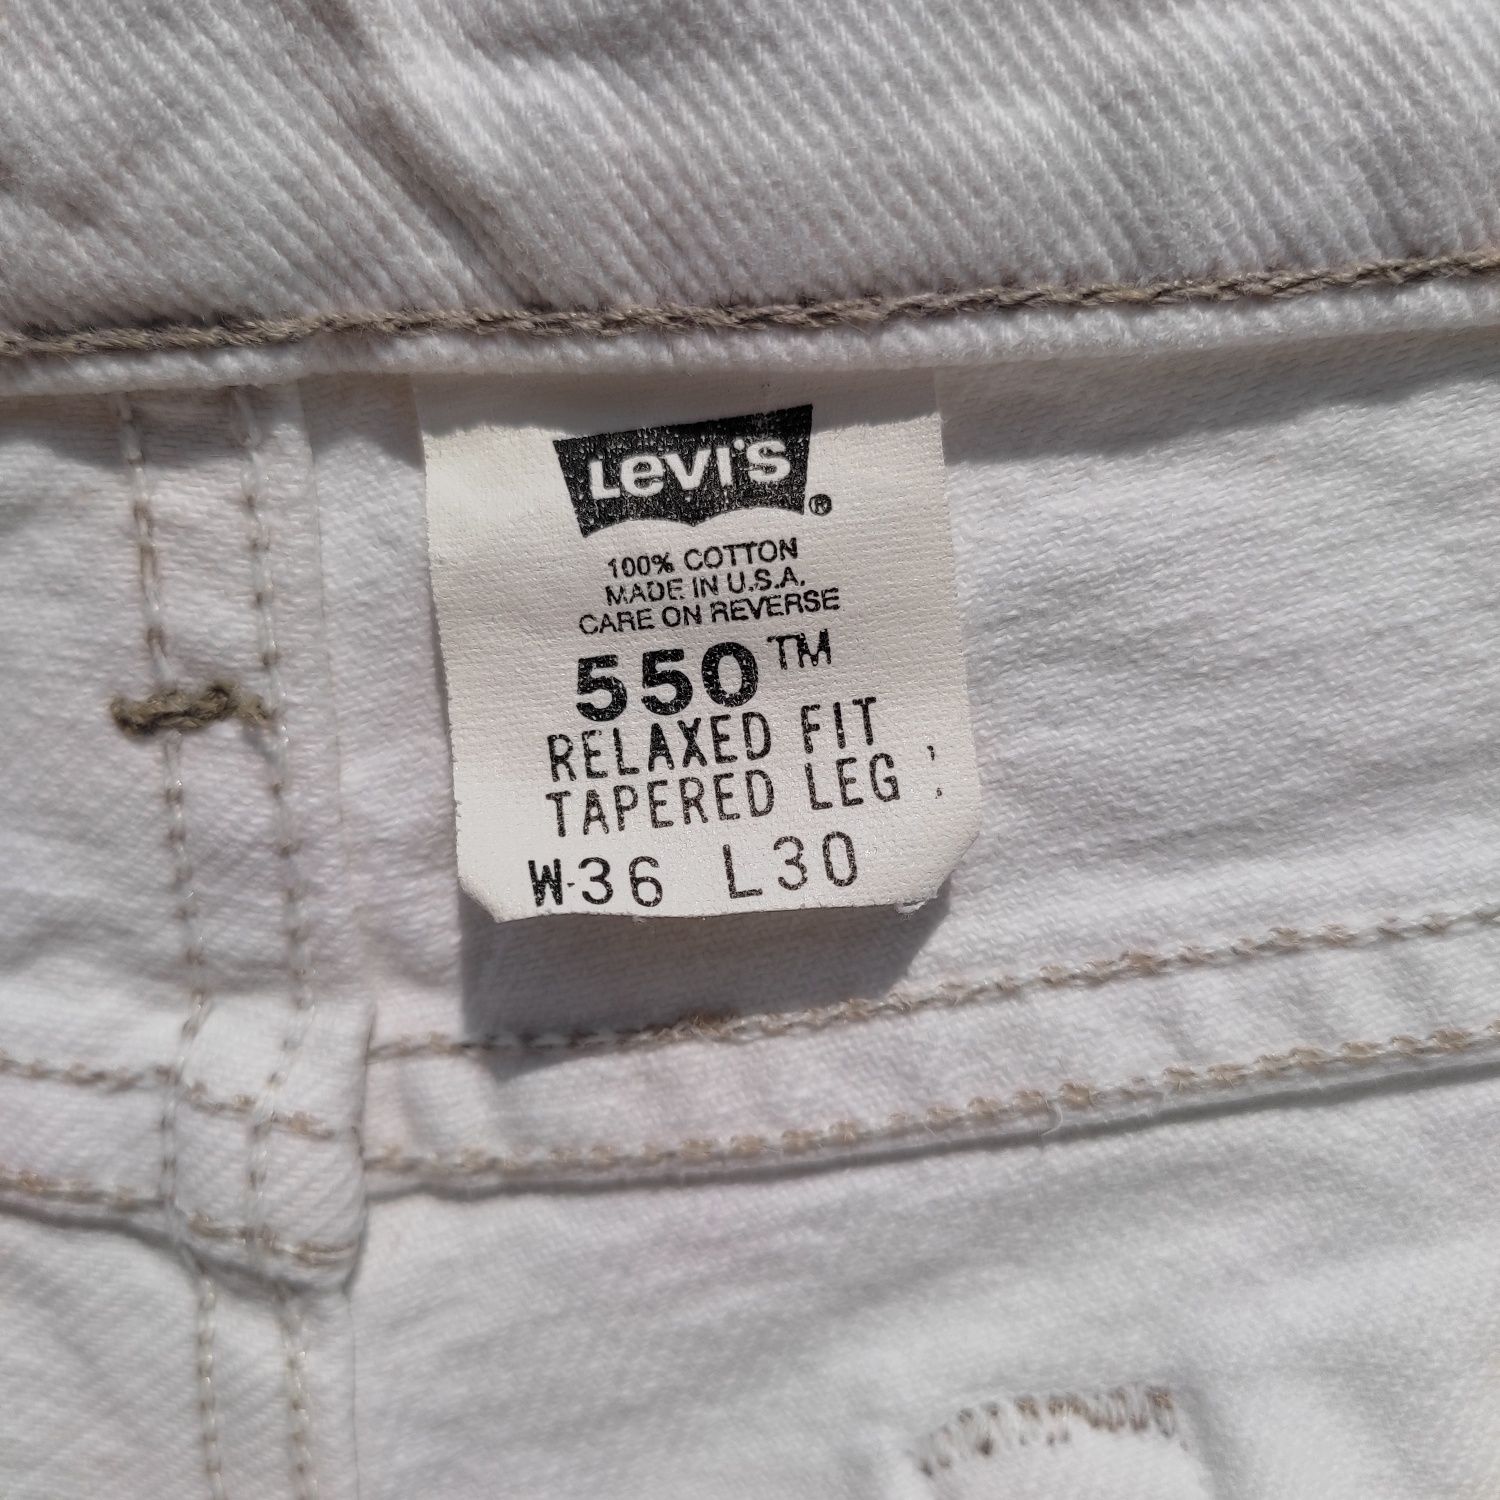 Мужские винтажные джинсы levis 550 relaxed fit tareped leg
made in usa